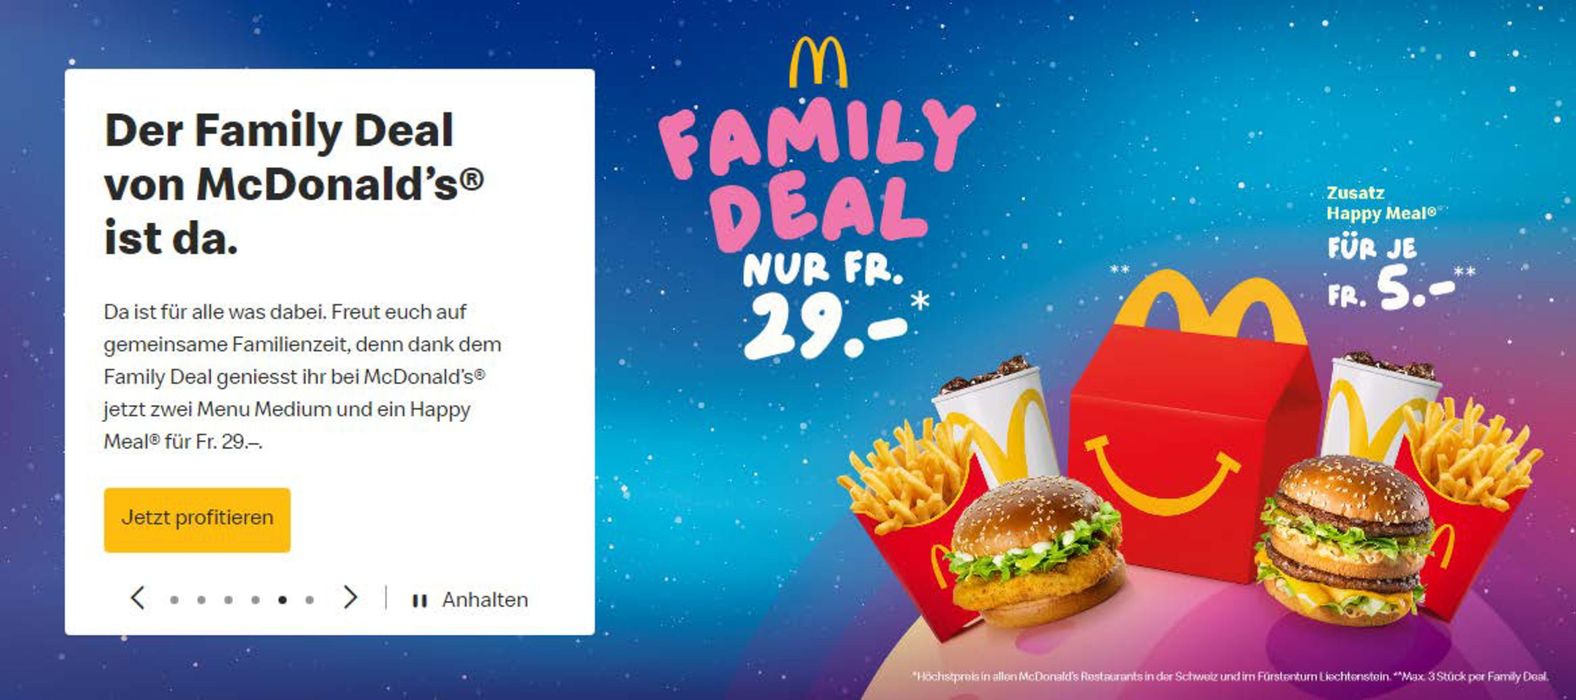 McDonald's Katalog | Big Bang Menu | 23.5.2024 - 31.8.2024